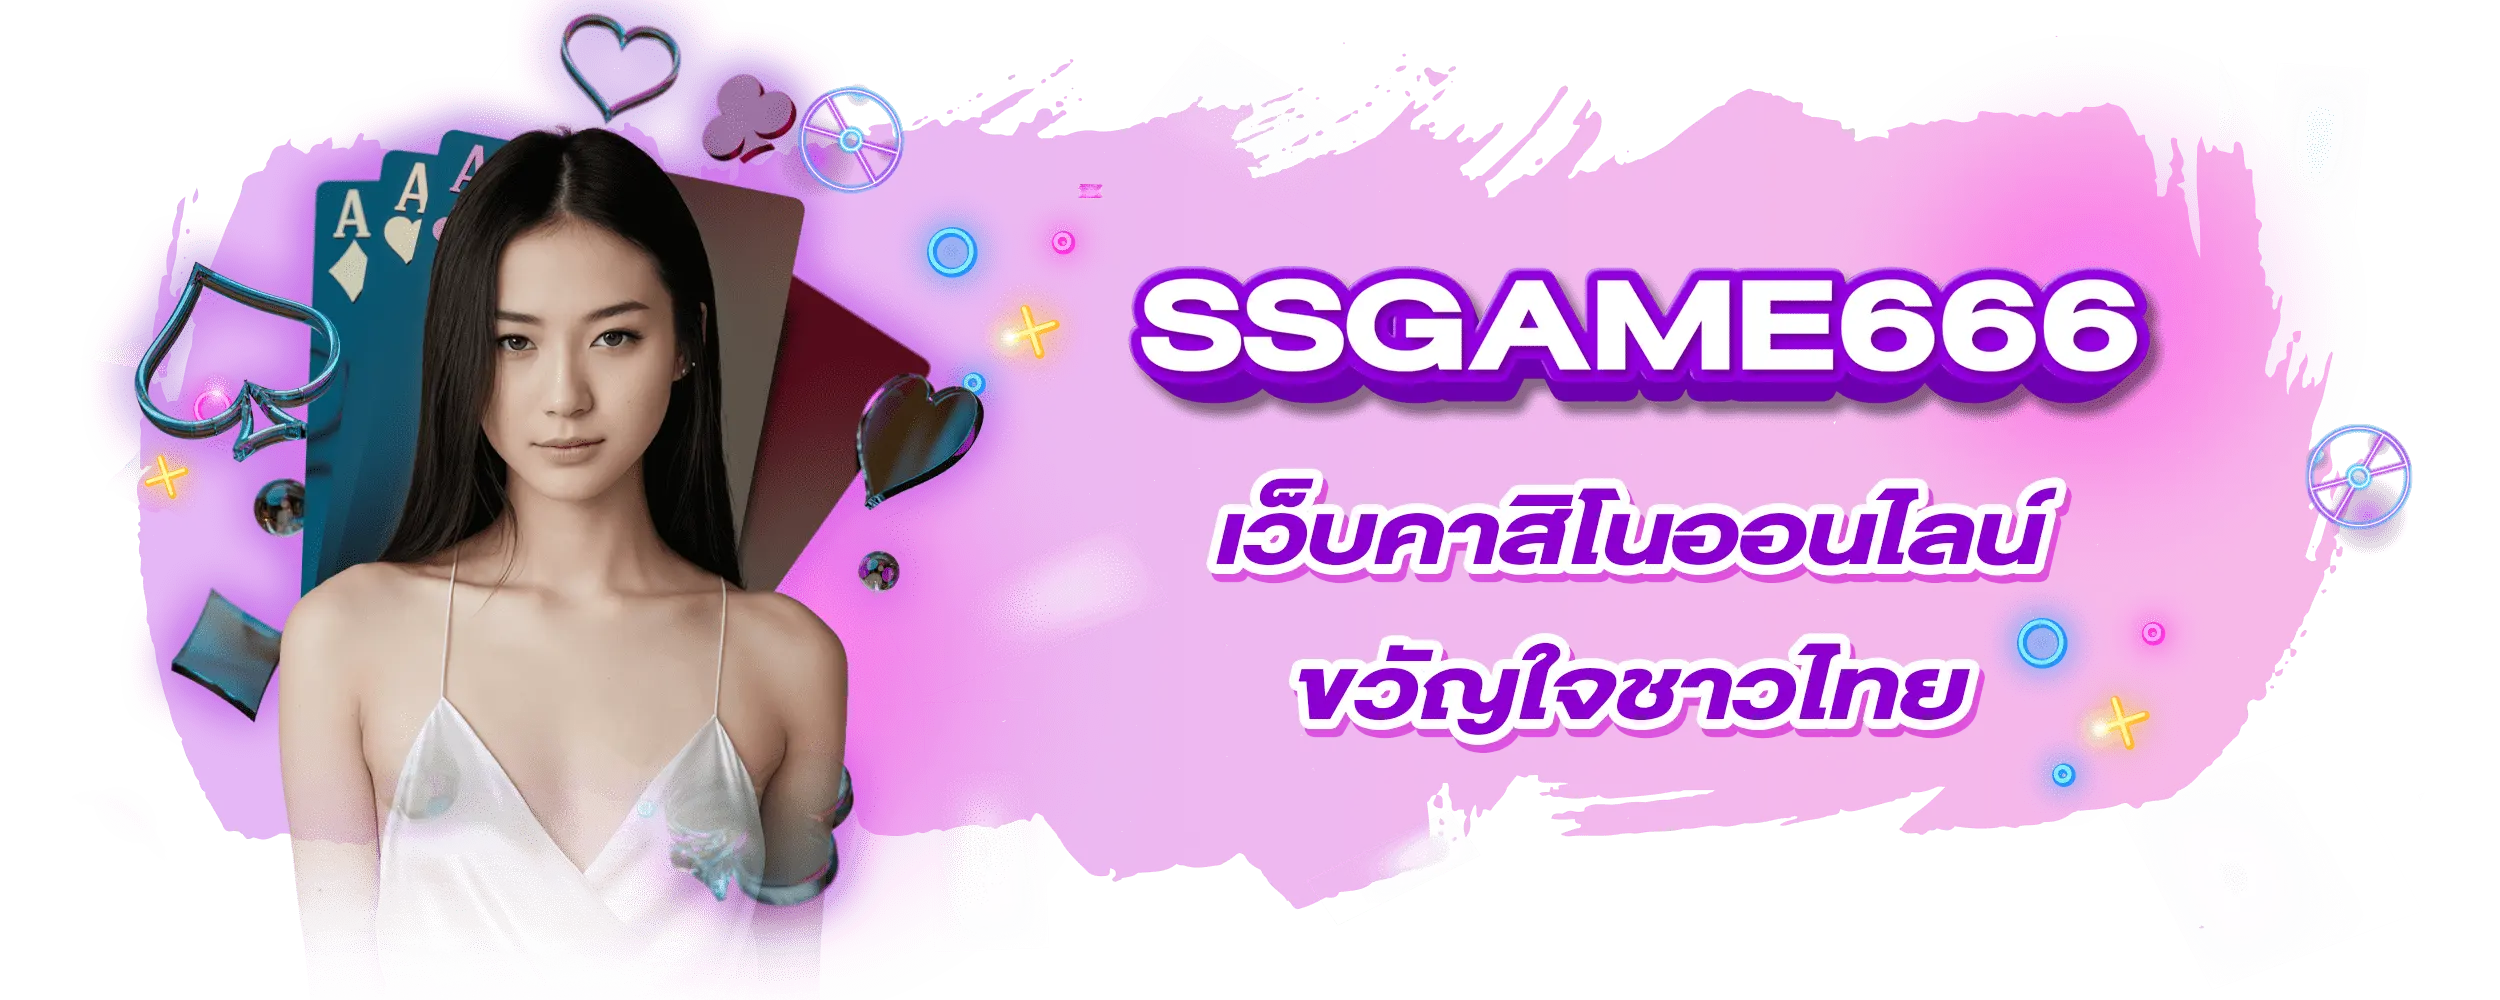 SSGAME666 